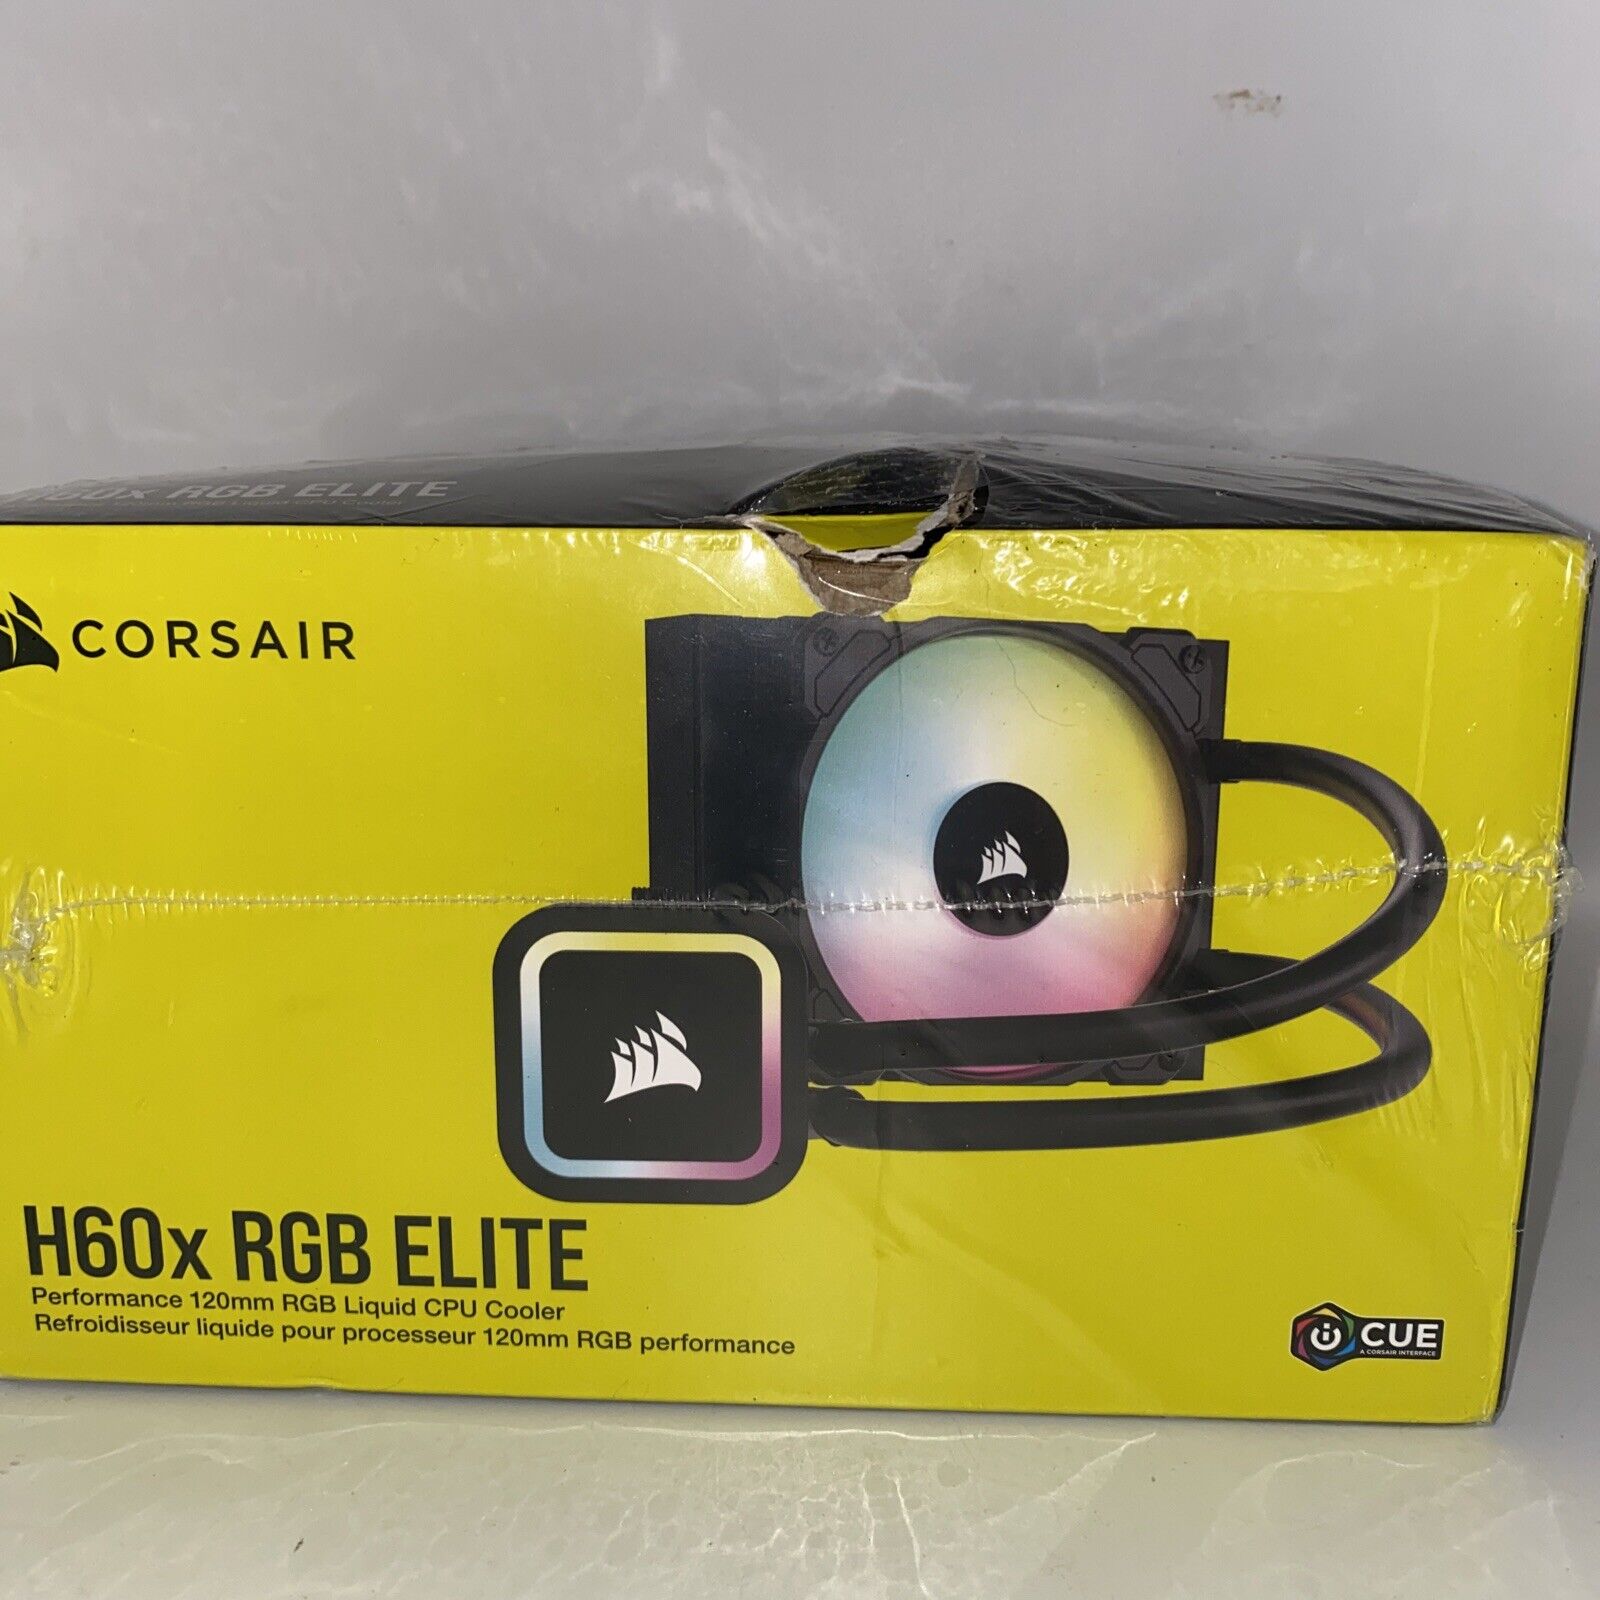 Corsair H60x RGB Elite Liquid CPU Cooler 120mm AIO - Black